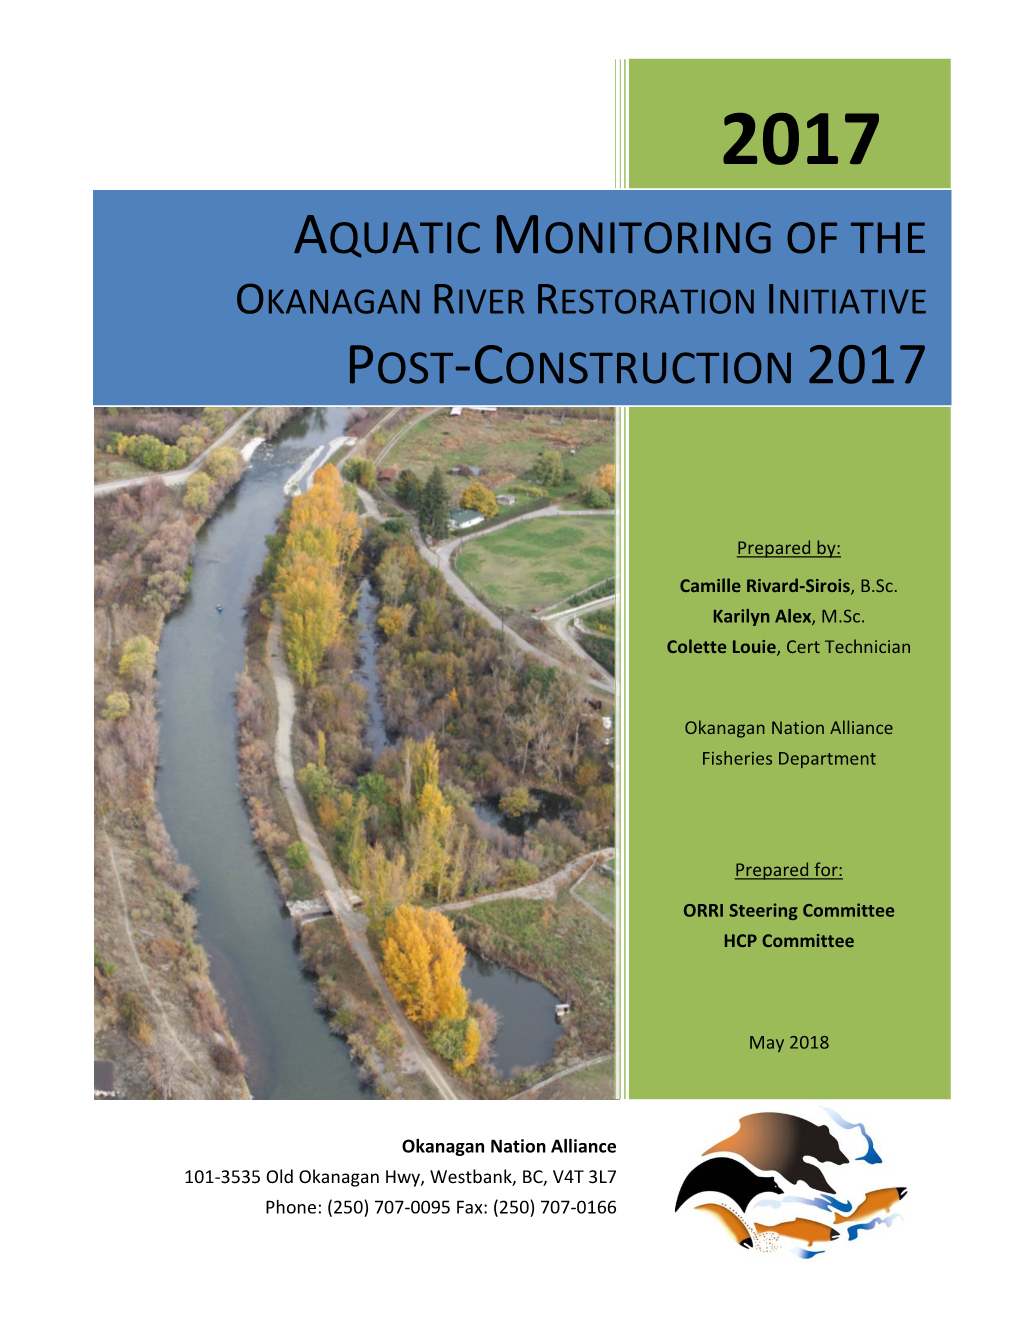 Monitoring of the Okanagan River Restoration Initiative (ORRI) – Post-Construction 2017